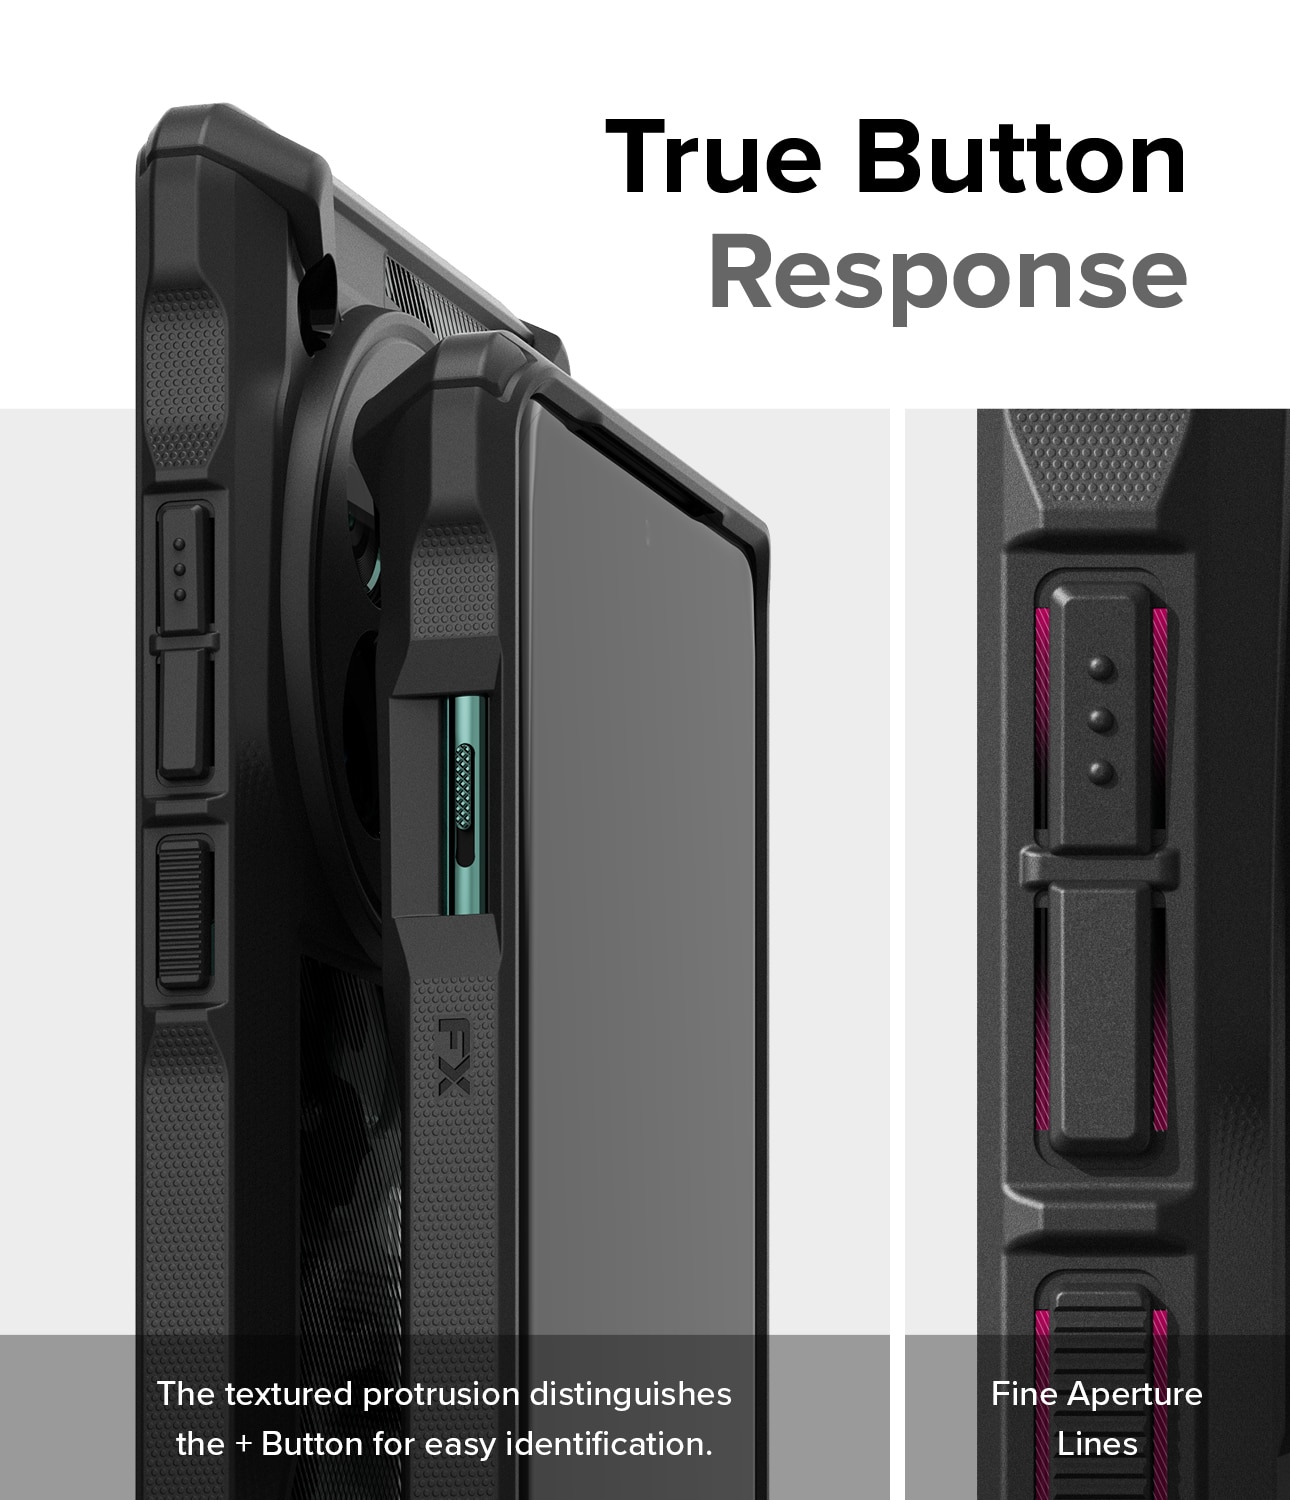 Cover Fusion X OnePlus 12 Camo Black